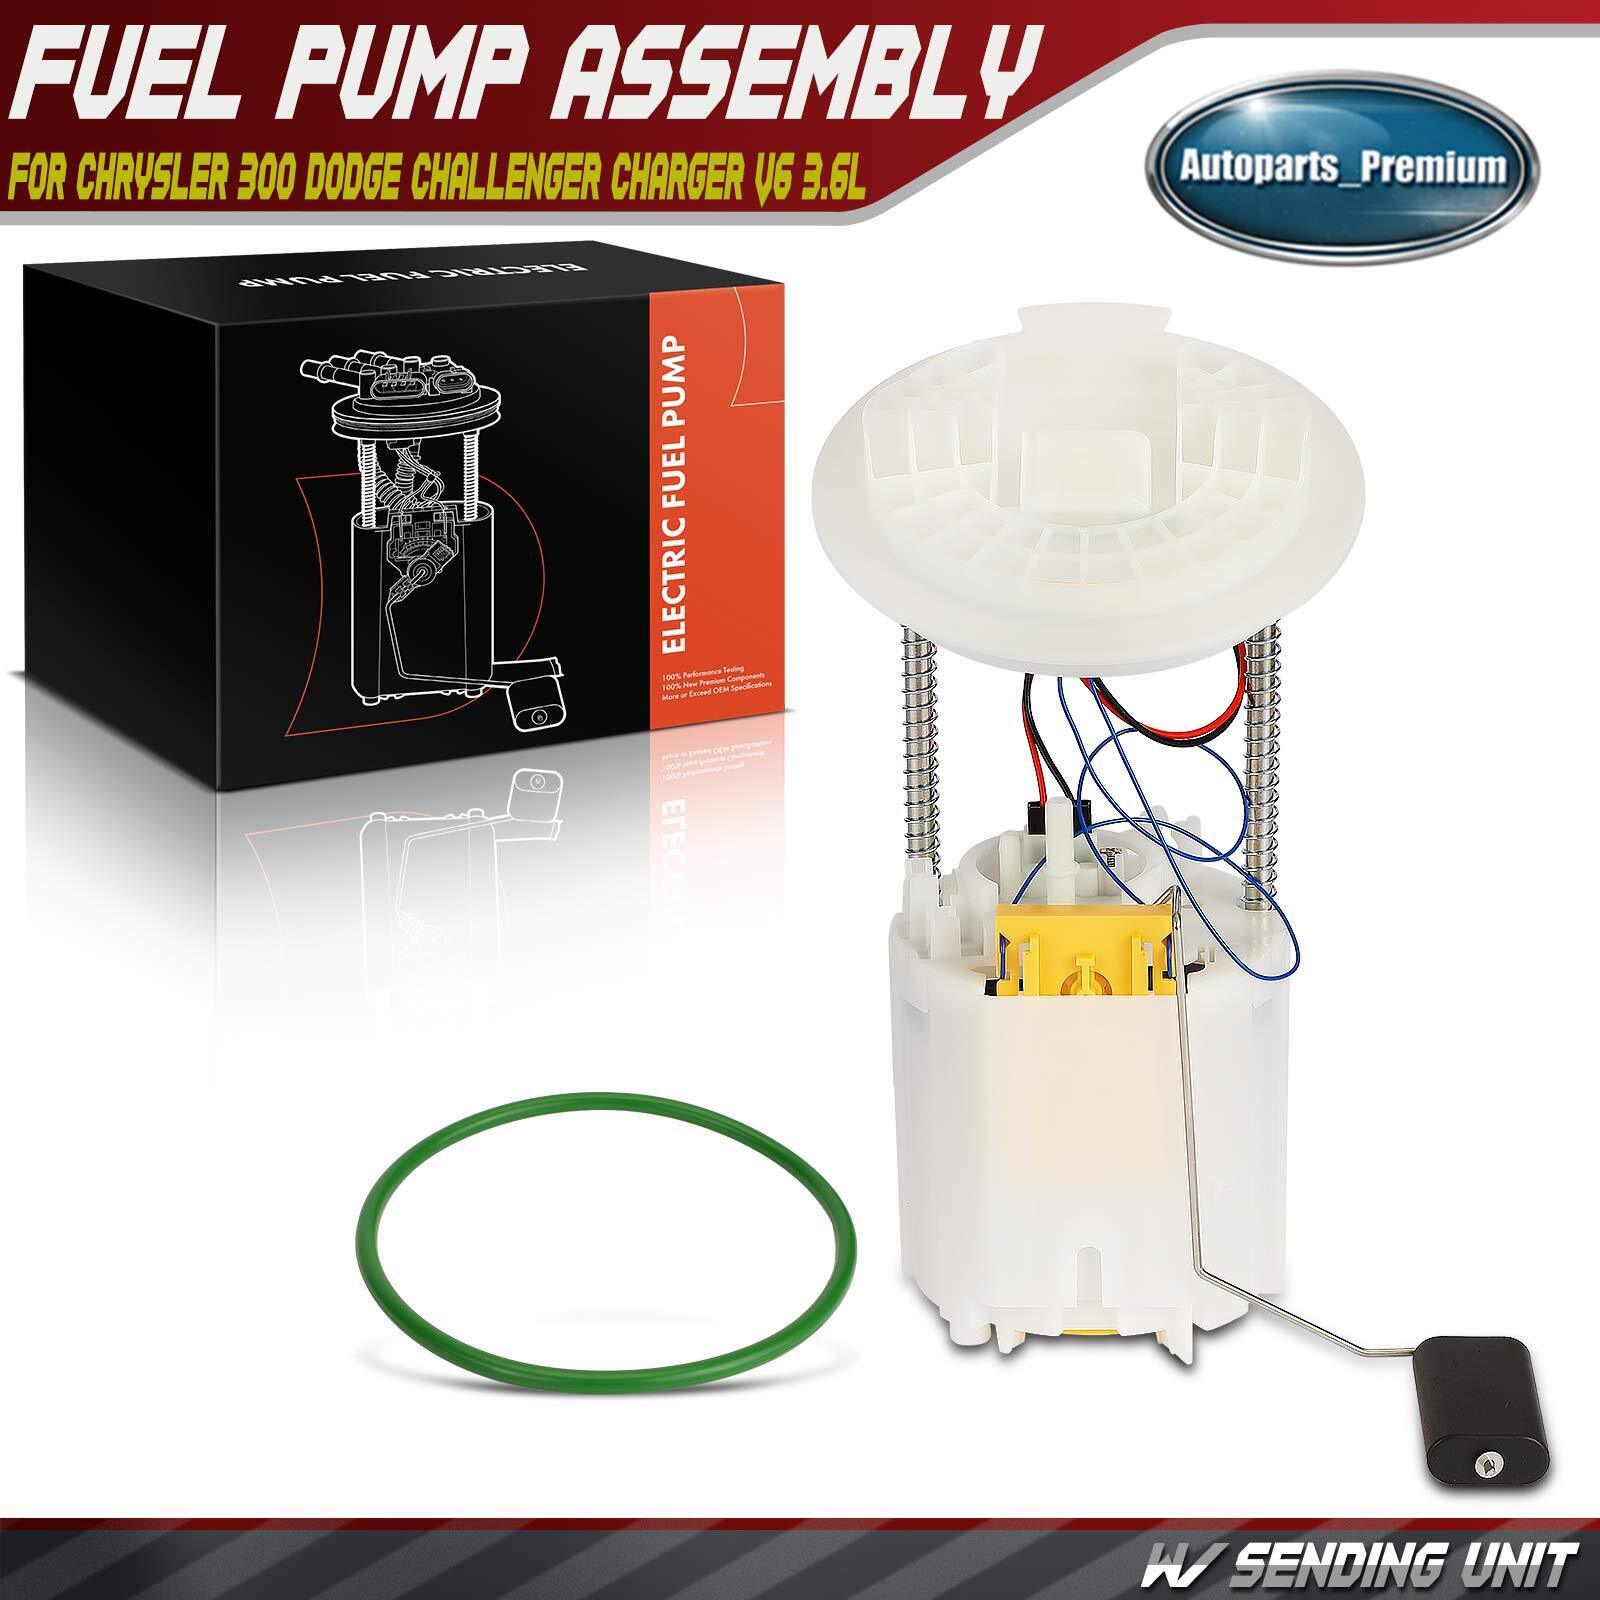 Fuel Pump Assembly for Dodge Charger Challenger 300 2011-2016 5.7L 3.6L E7263M